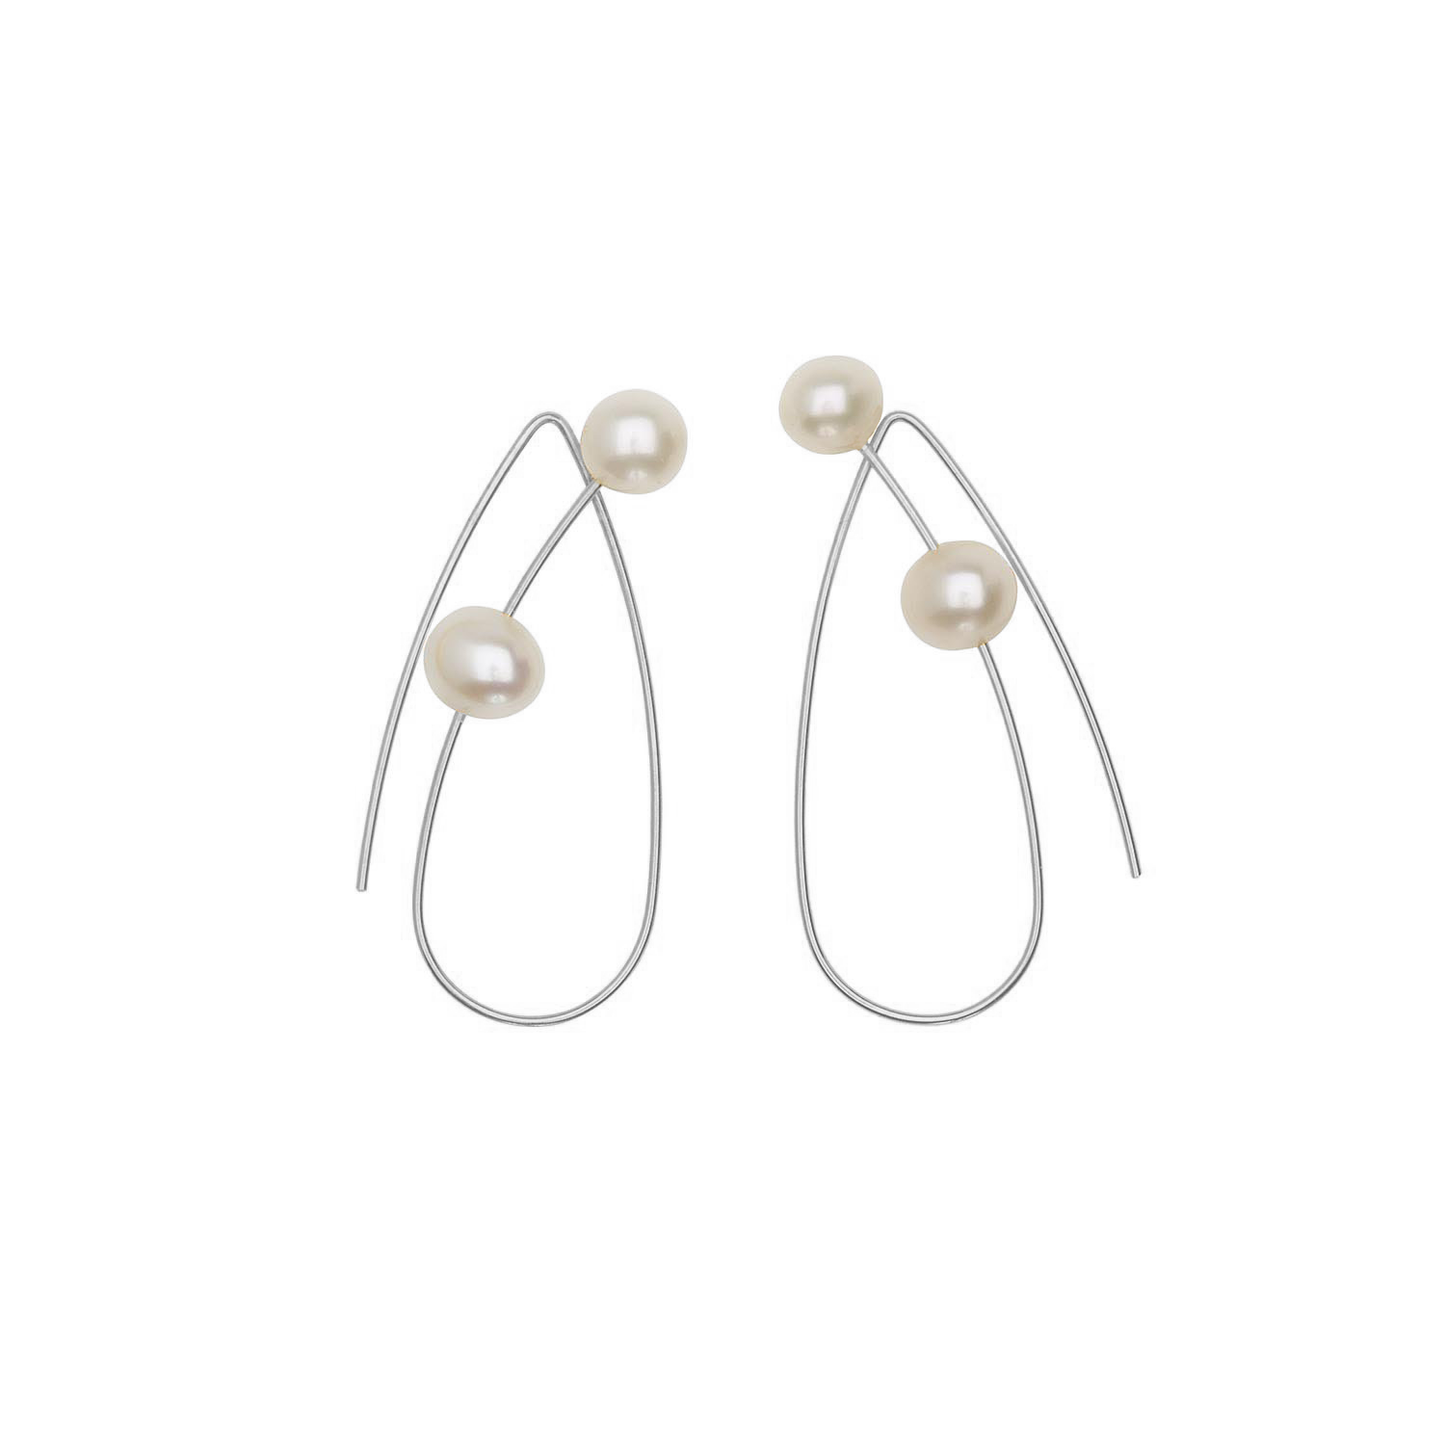 Pointed Loop Earrings with Round Freshwater Pearls